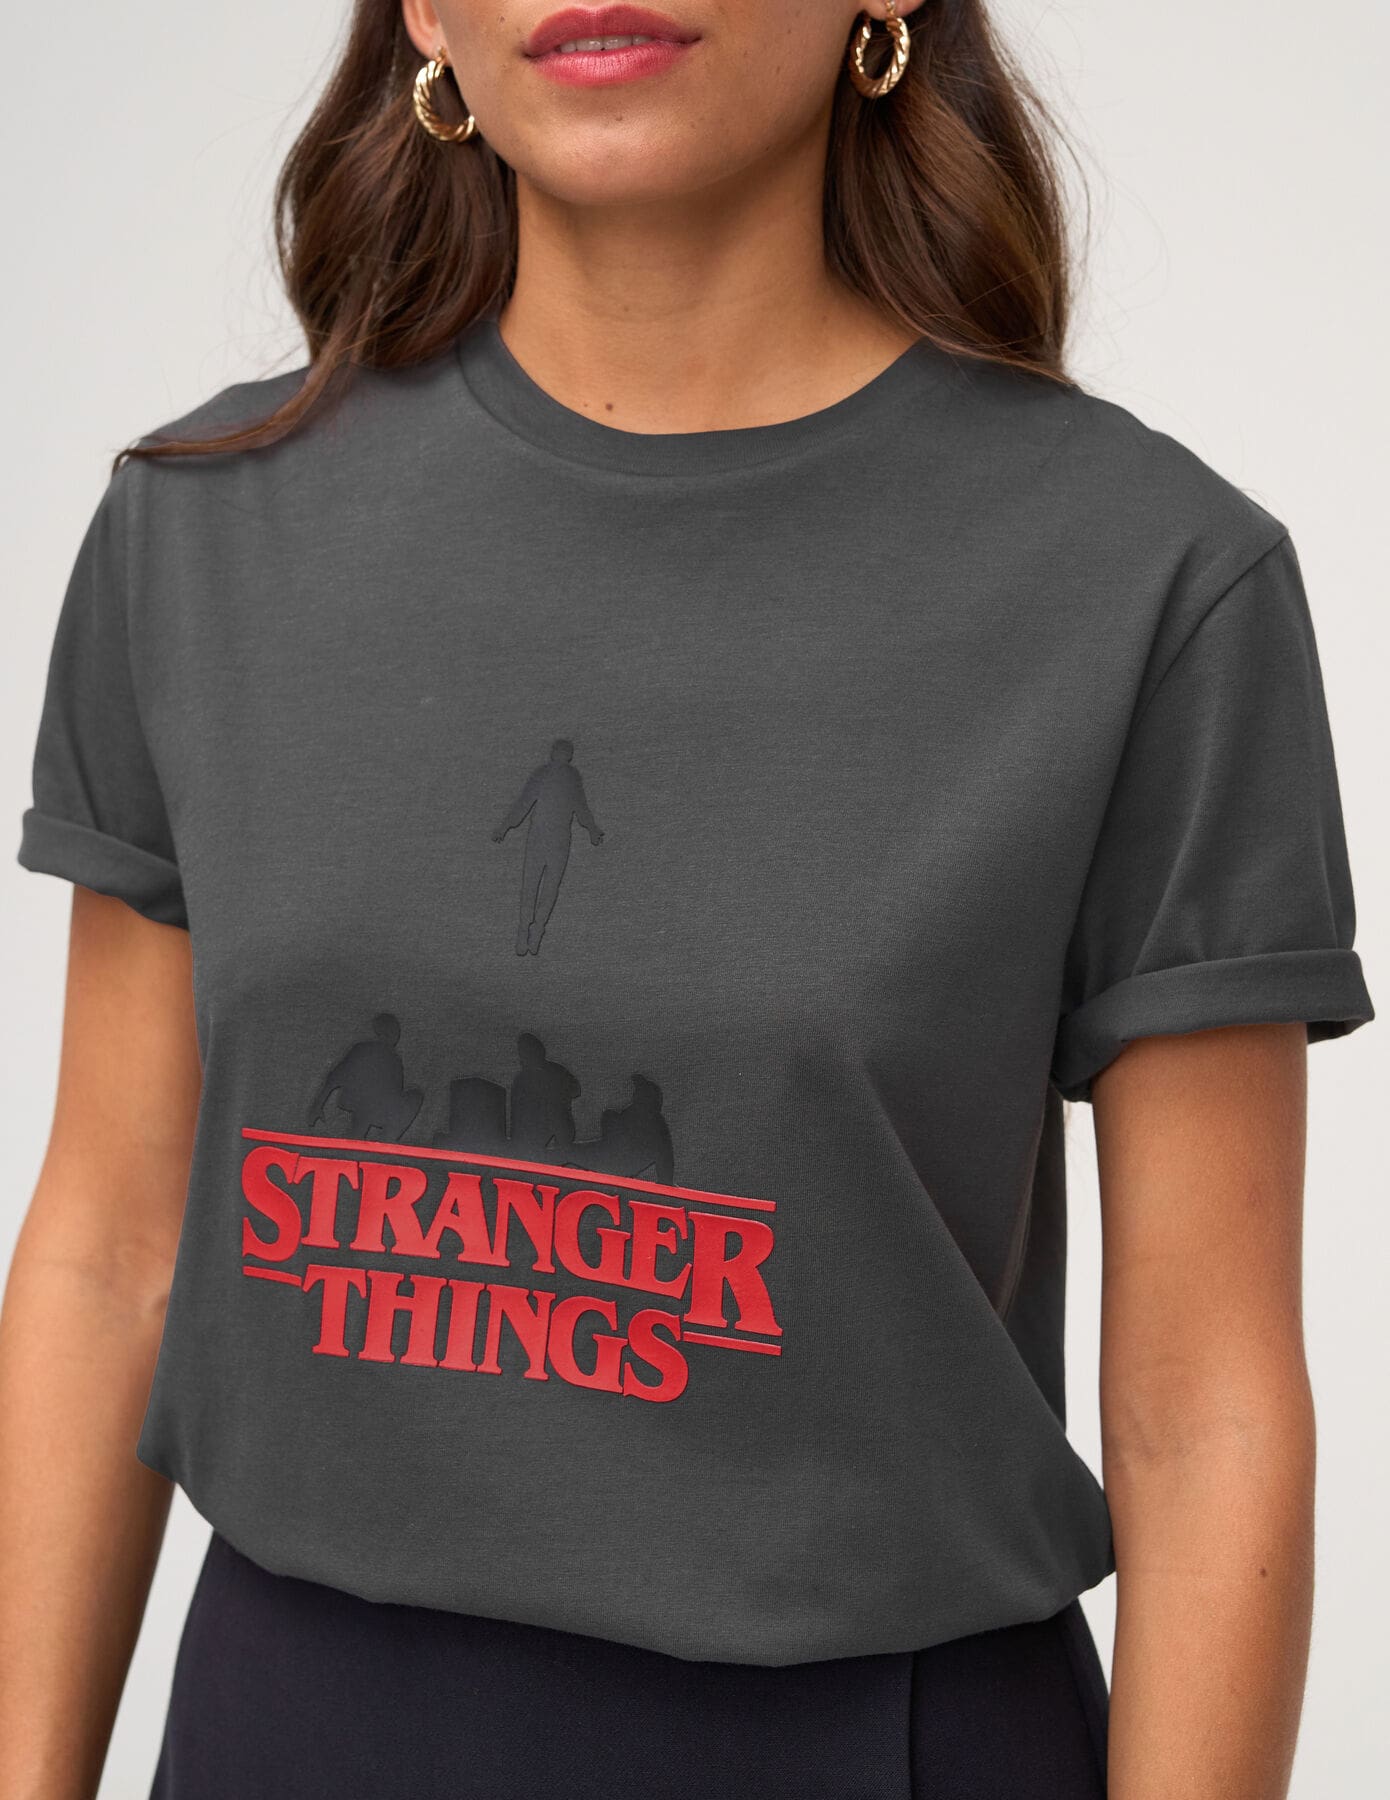 T-shirt licence STRANGER THINGS